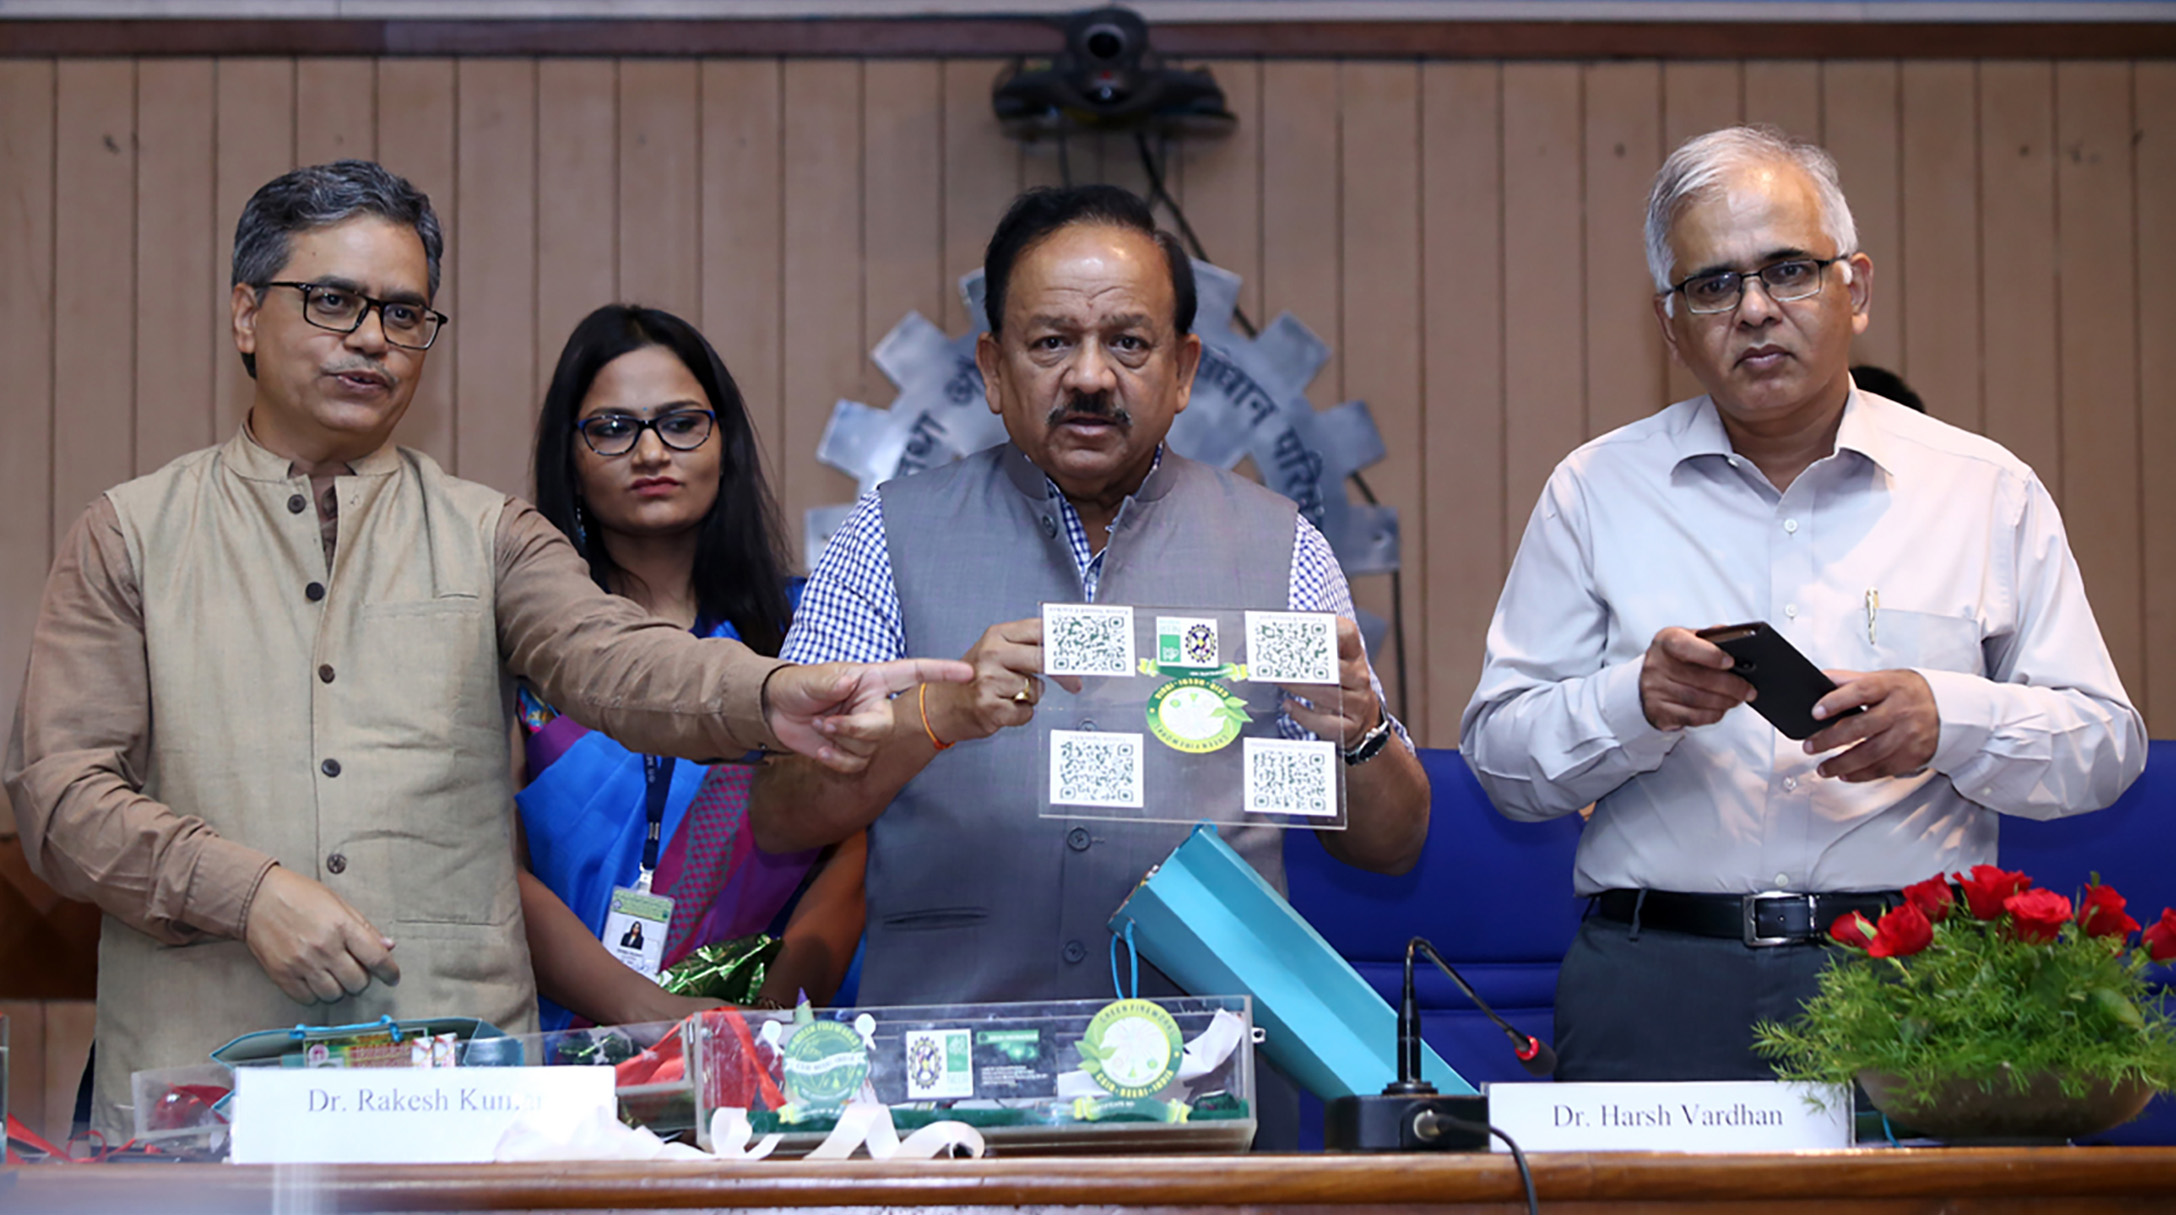 Harsh Vardhan launches eDantseva website and mobile application, a big step in digital health